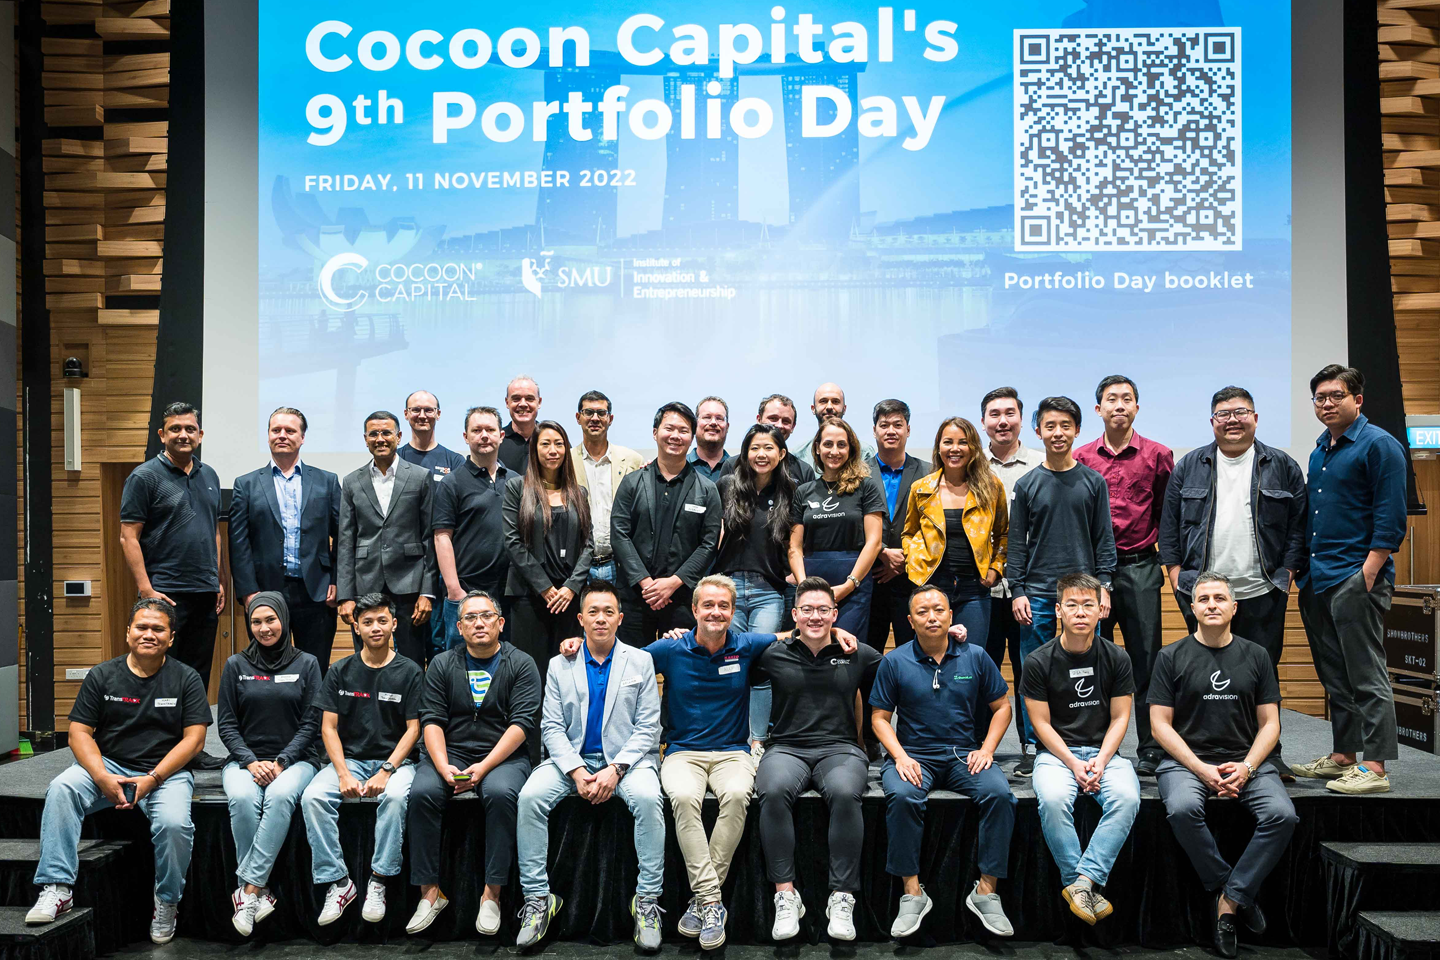 Cocoon Capital's 9th Portfolio Day in Singapore